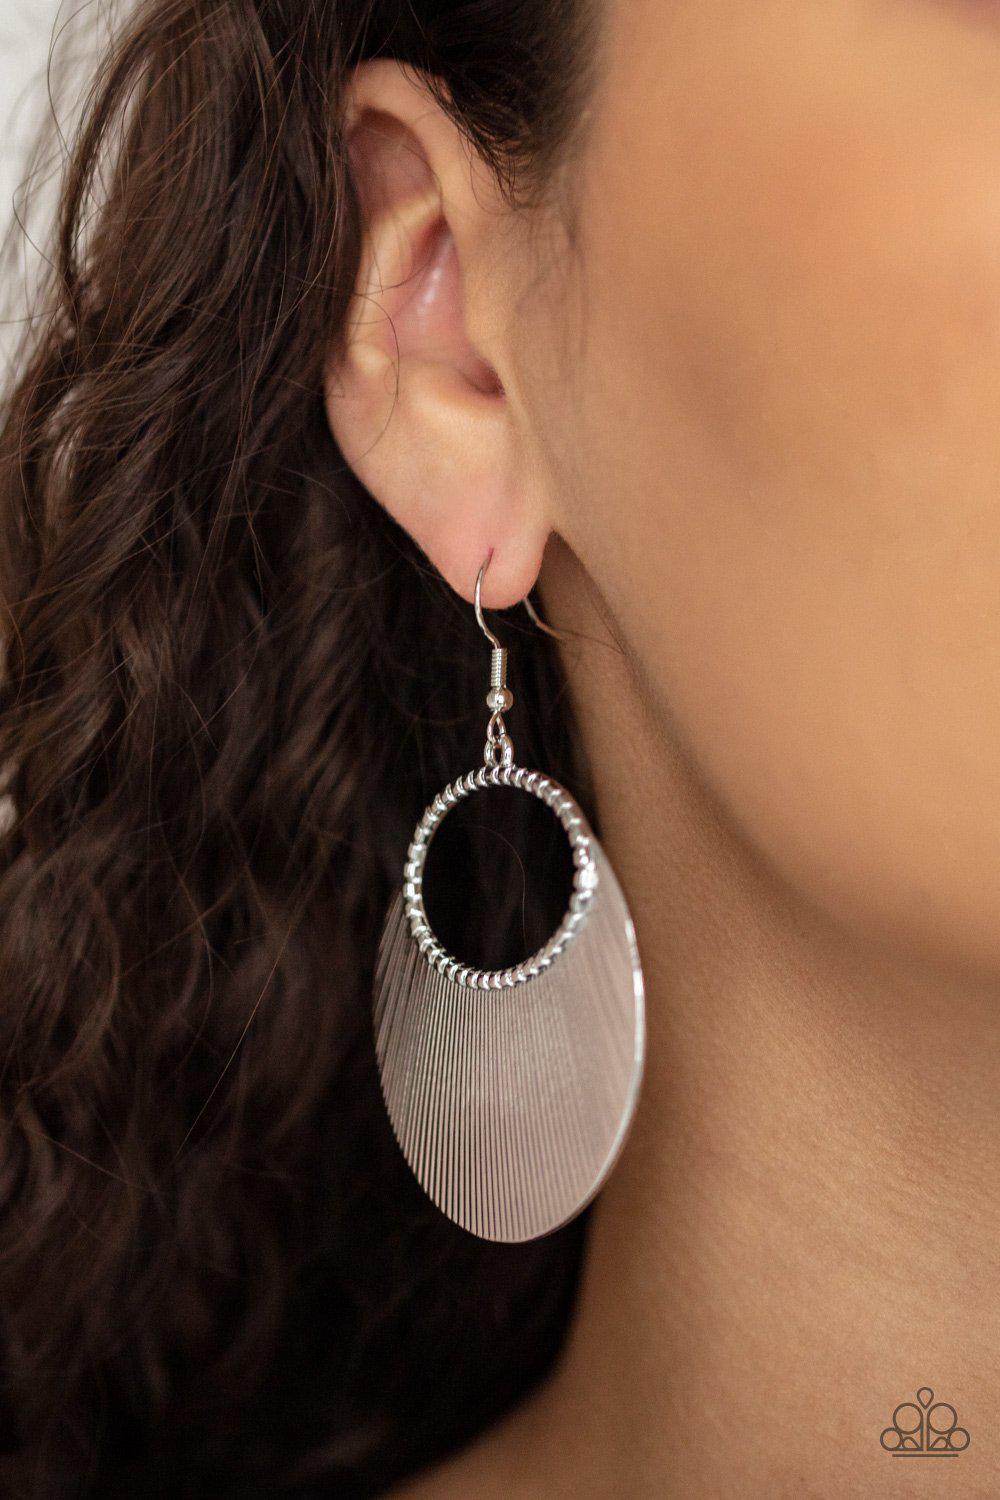 Fan Girl Glam Silver Earrings - Paparazzi Accessories- model - CarasShop.com - $5 Jewelry by Cara Jewels